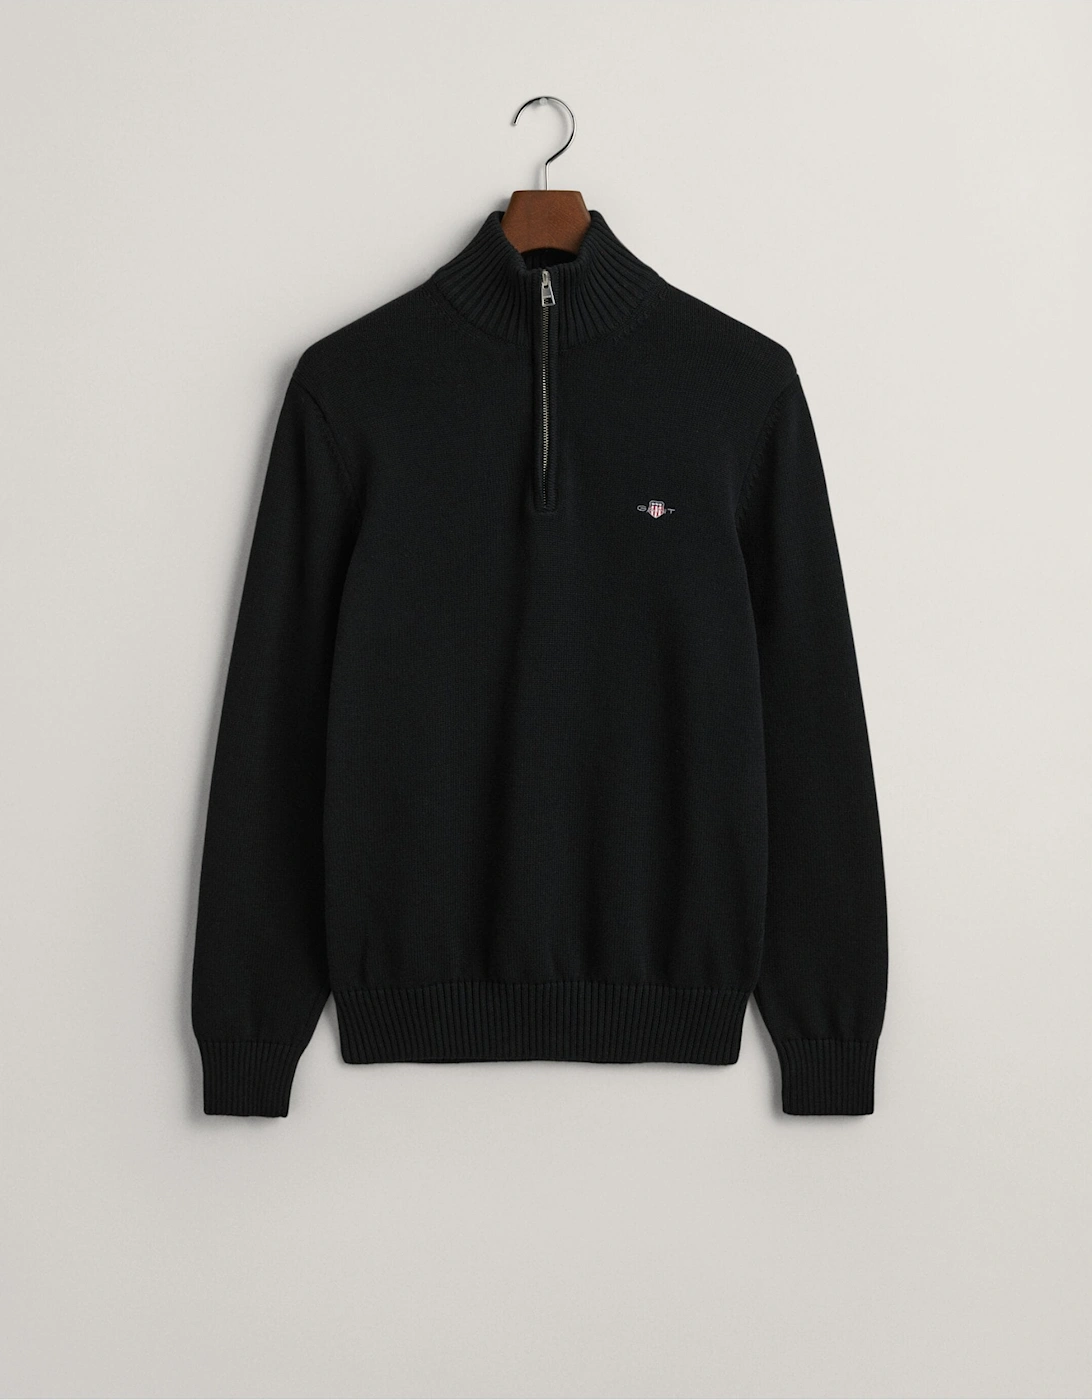 Casual Cotton Black Half-Zip Sweater